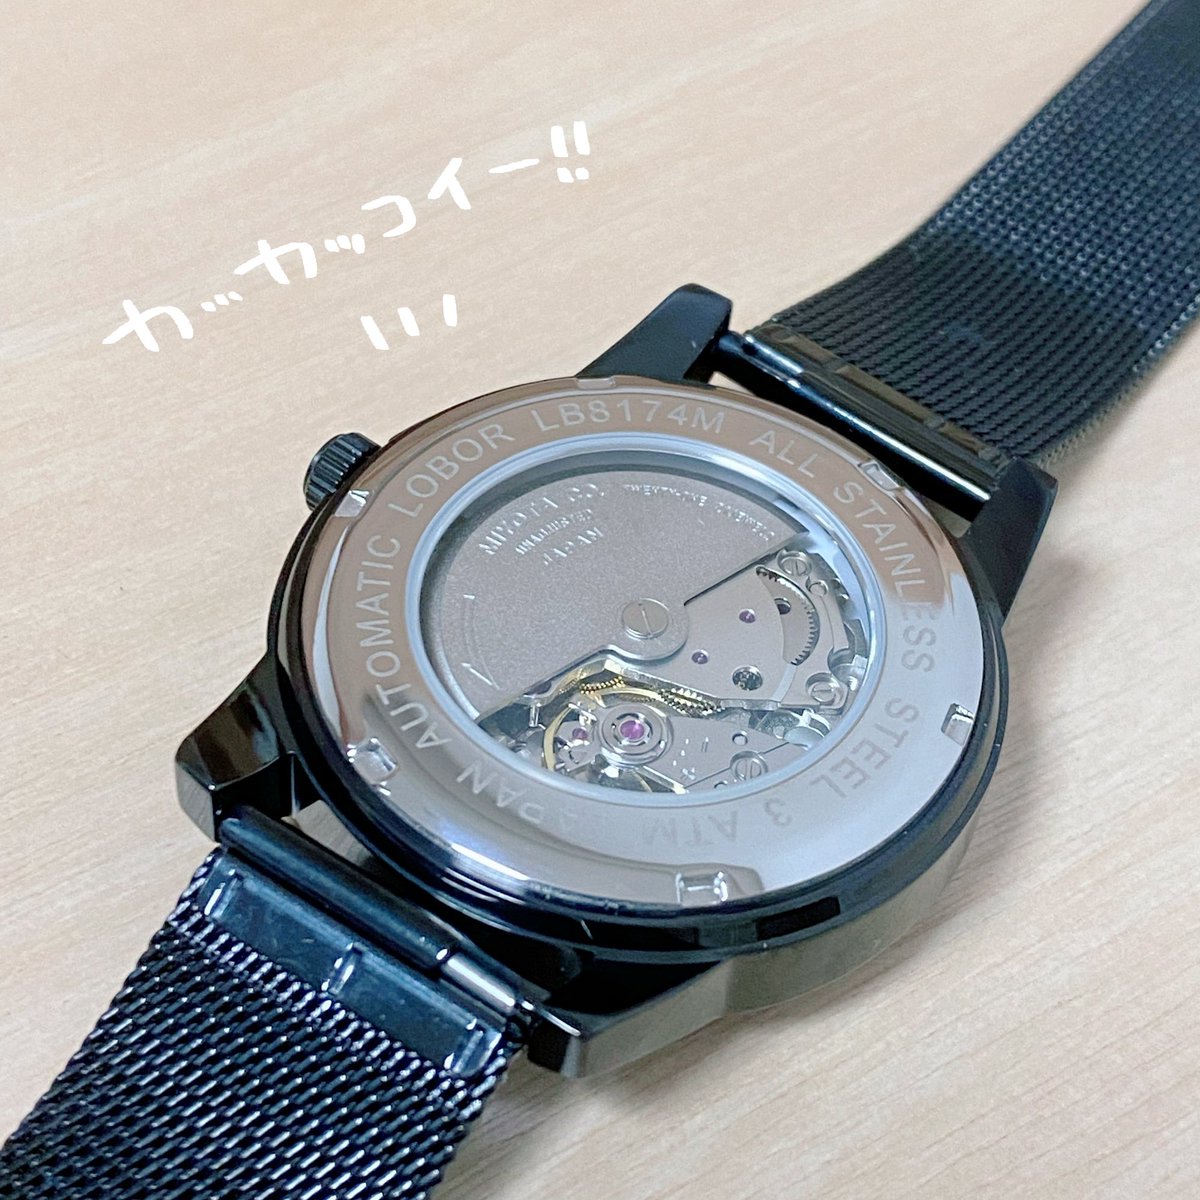 LOBORさん( @LoborJapan )にまたまたステキな腕時計をいただきました!文字盤だけだなく裏側までカッコイイ✨✨

#lobor #ロバー #腕時計 #時計 #手元倶楽部 #PR 